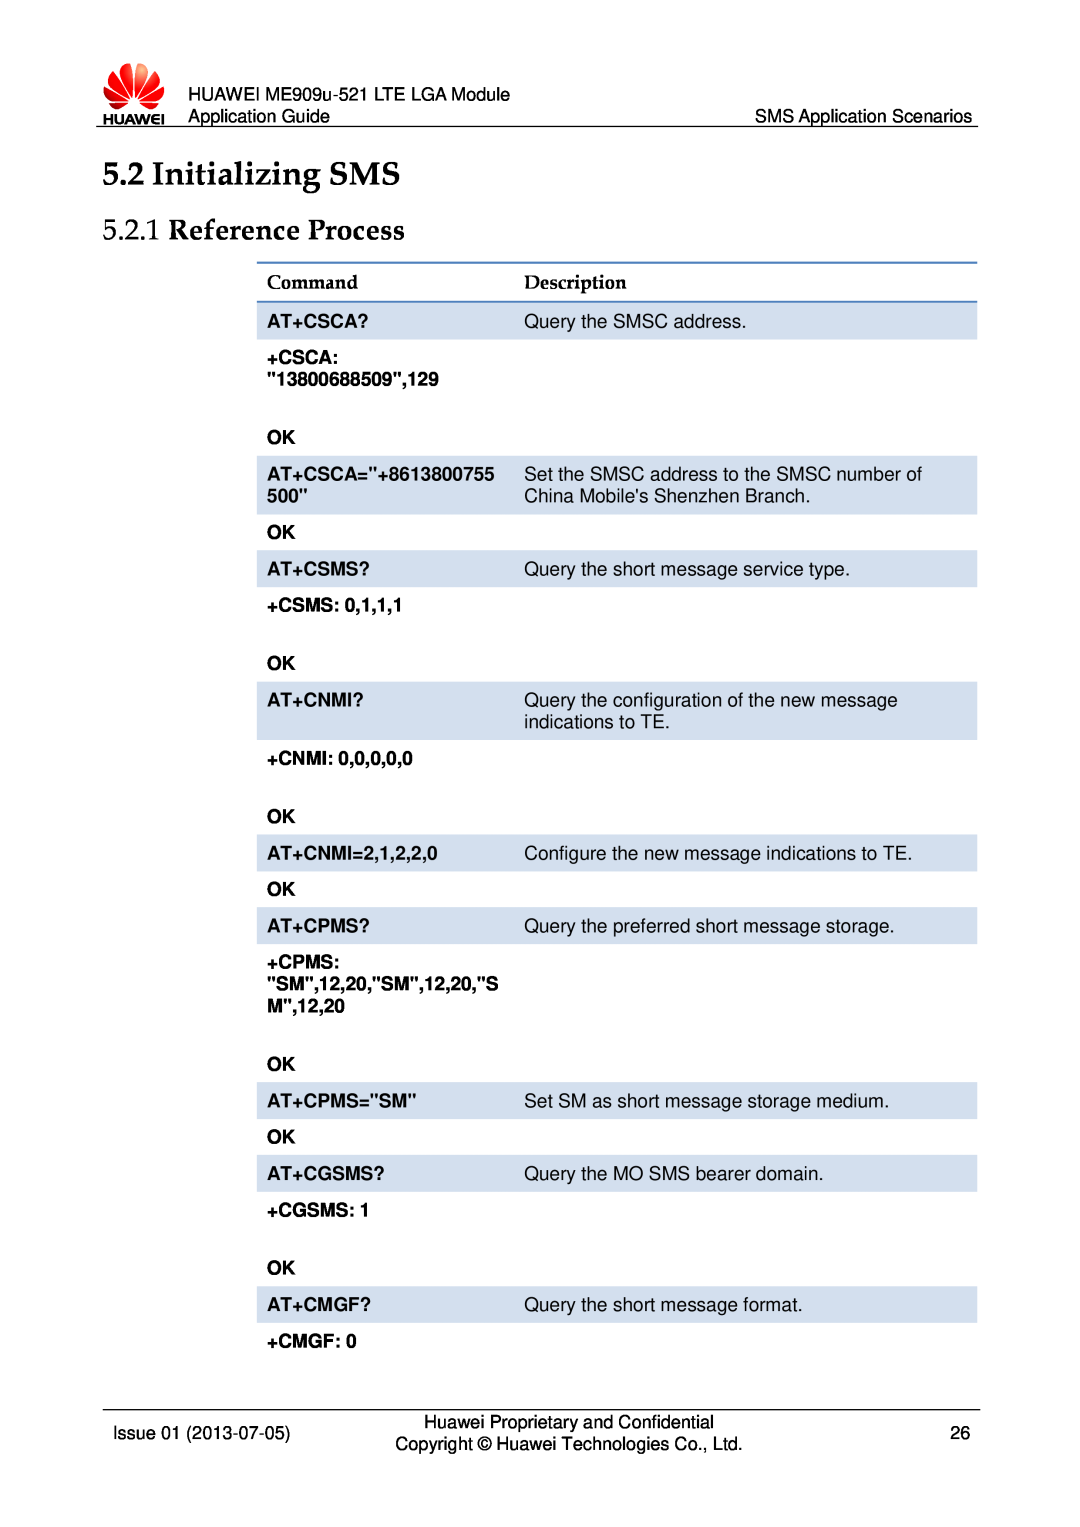 Huawei ME909u-521 manual Initializing SMS, Reference Process 